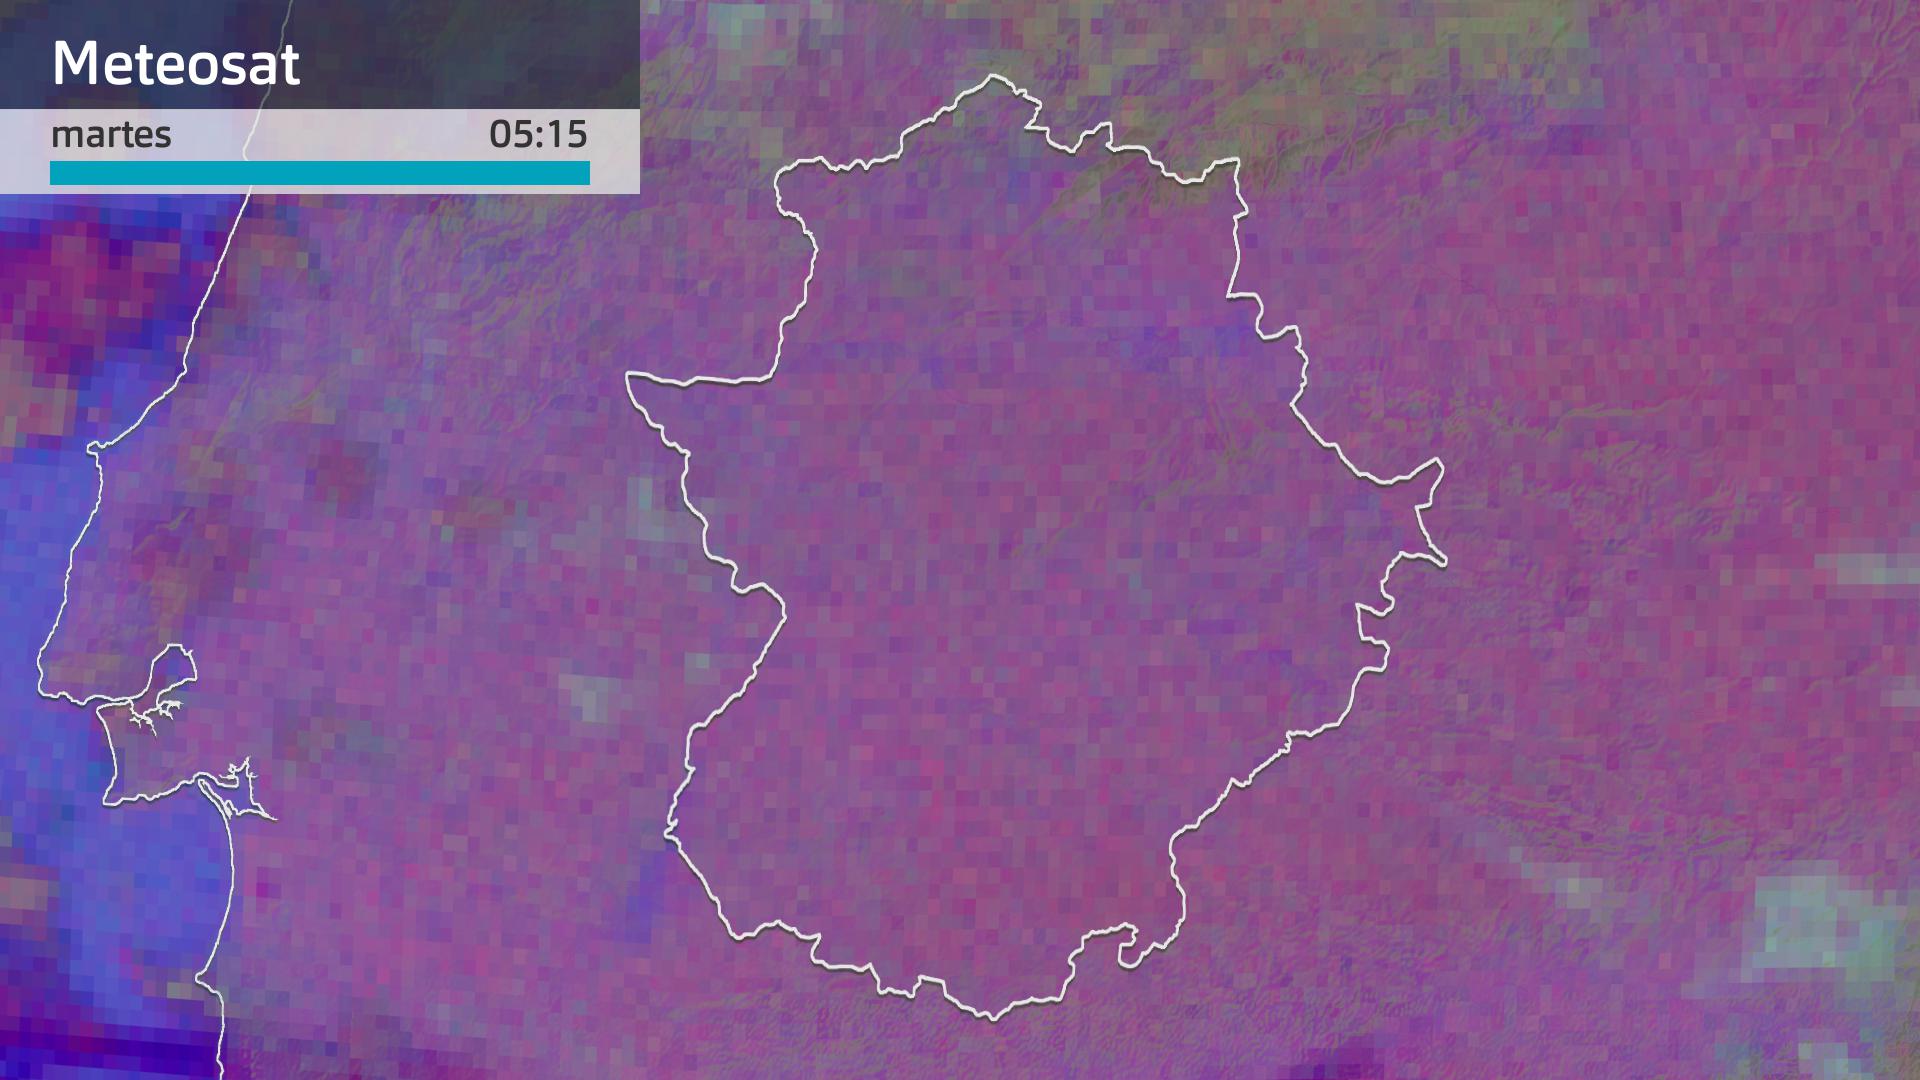 Imagen del Meteosat martes 5 de marzo 5:15 h.